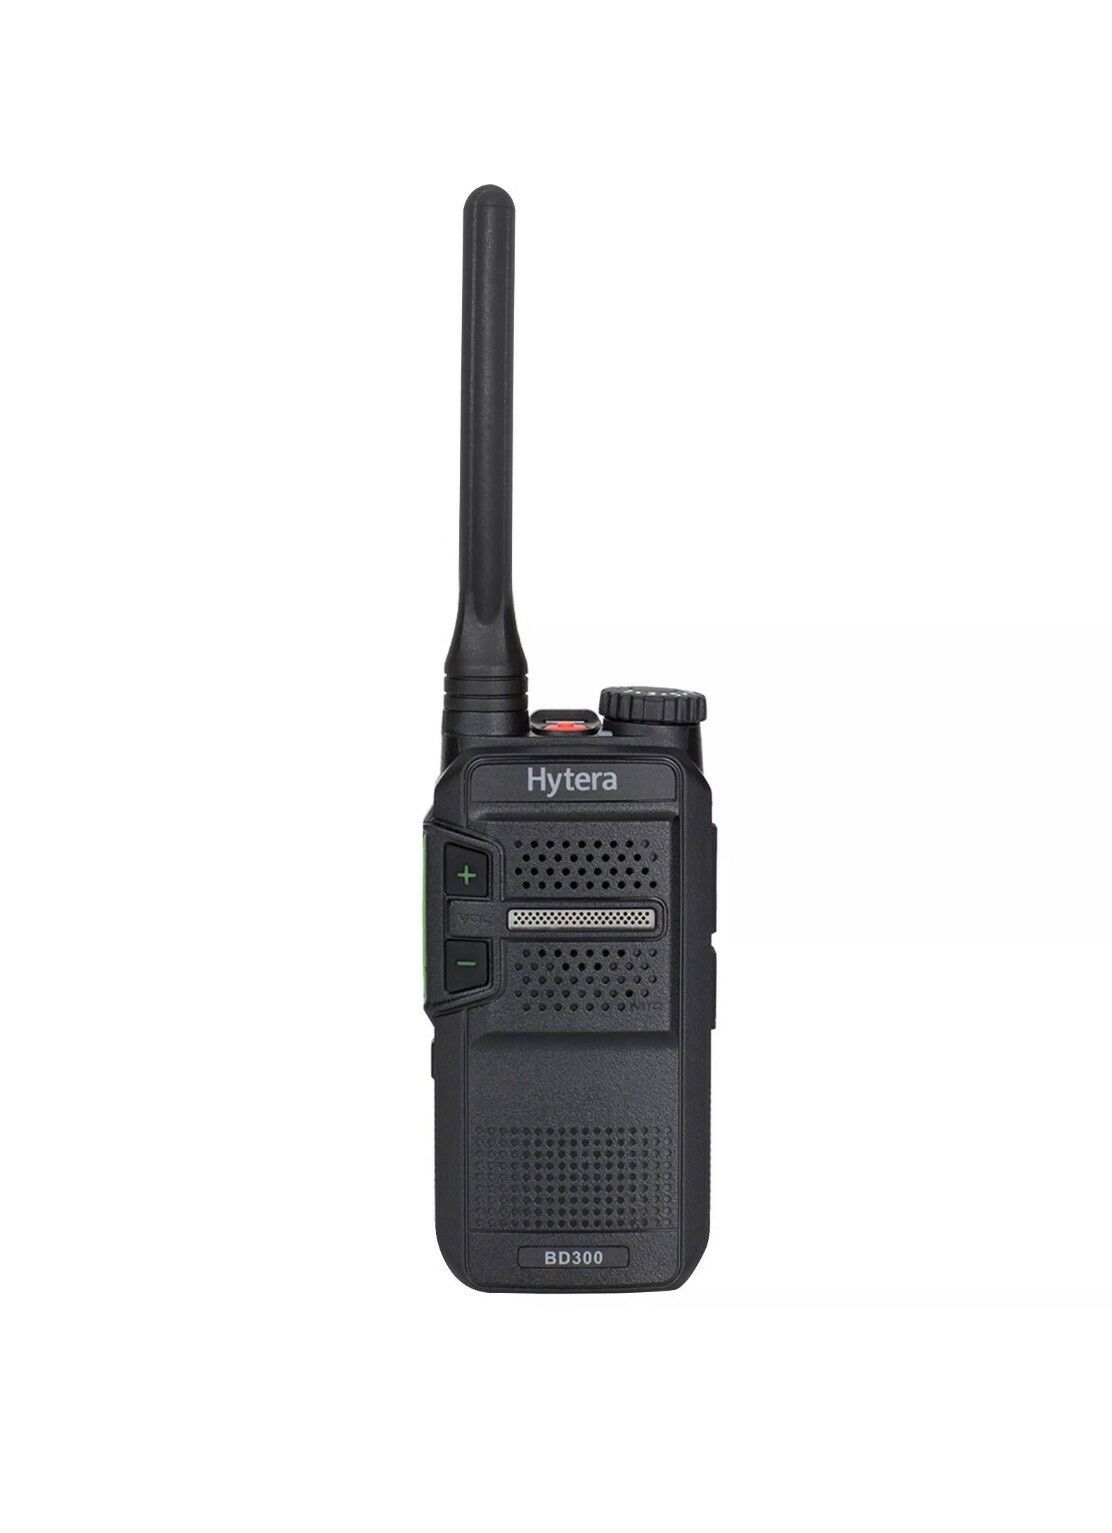 Hytera BD302 same As BD300 UHF 400-470MHz Digital DMR Portable Two Way Radio.